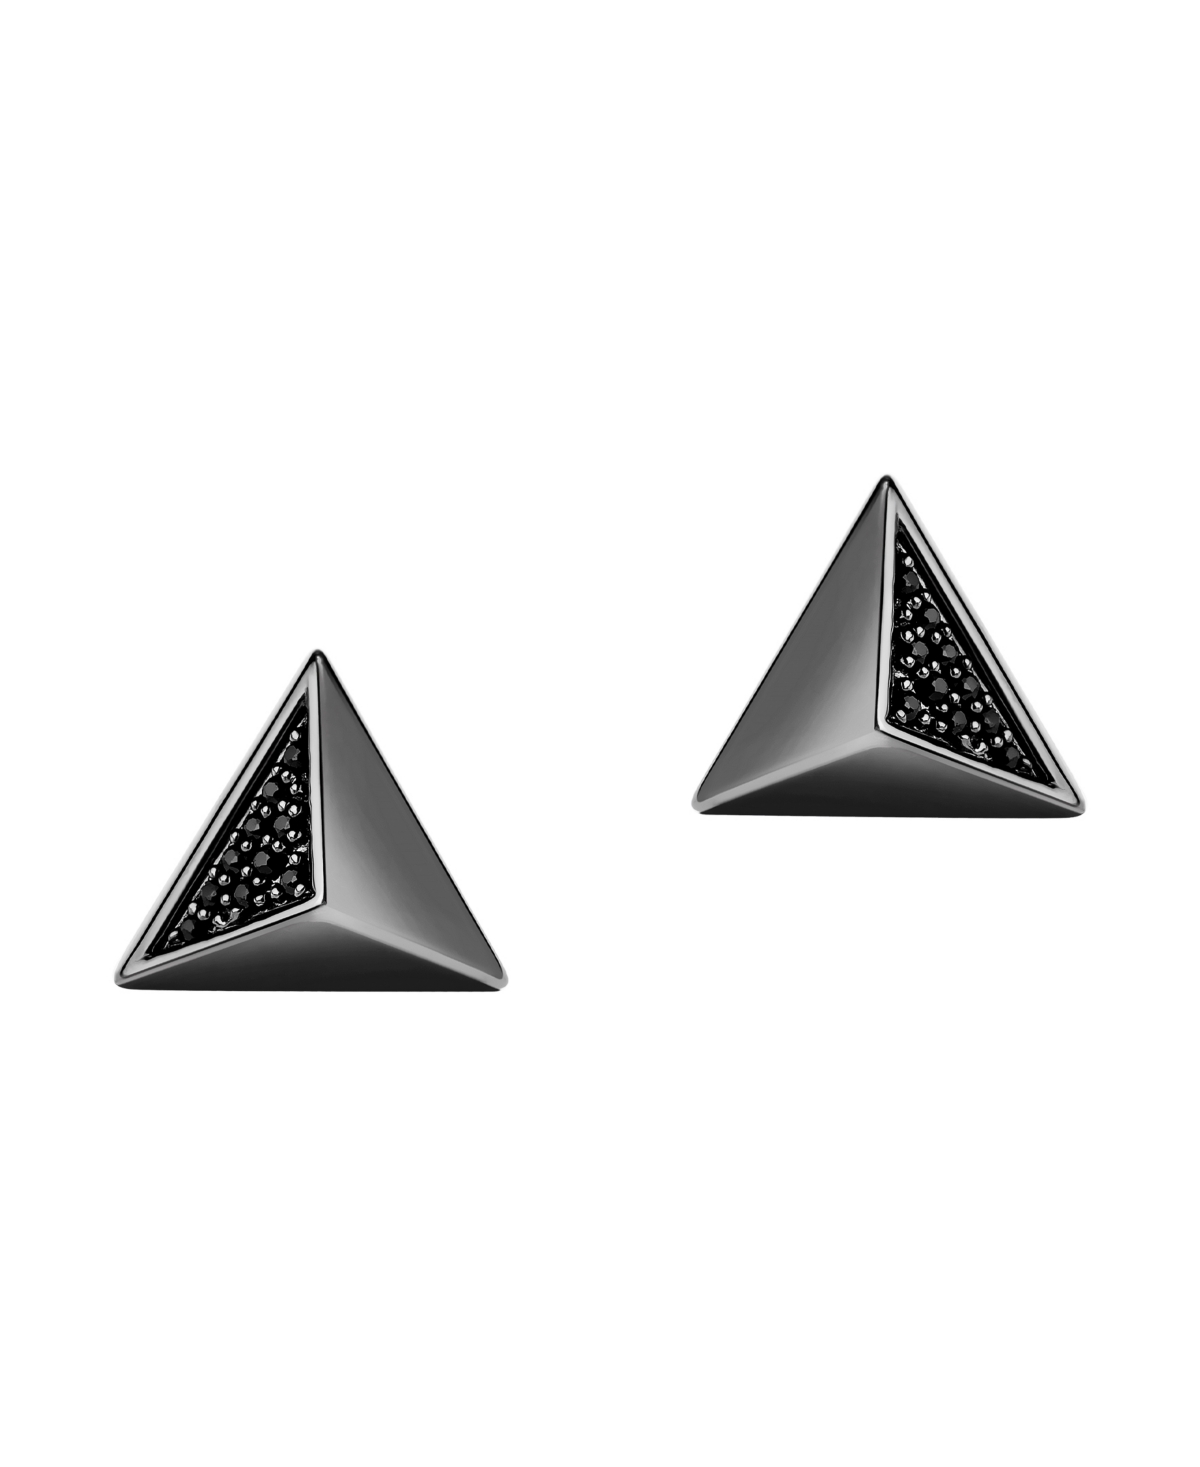 Dark Armor Stud Earrings Black Diamond Accent in Black Rhodium Over Sterling Silver - Black